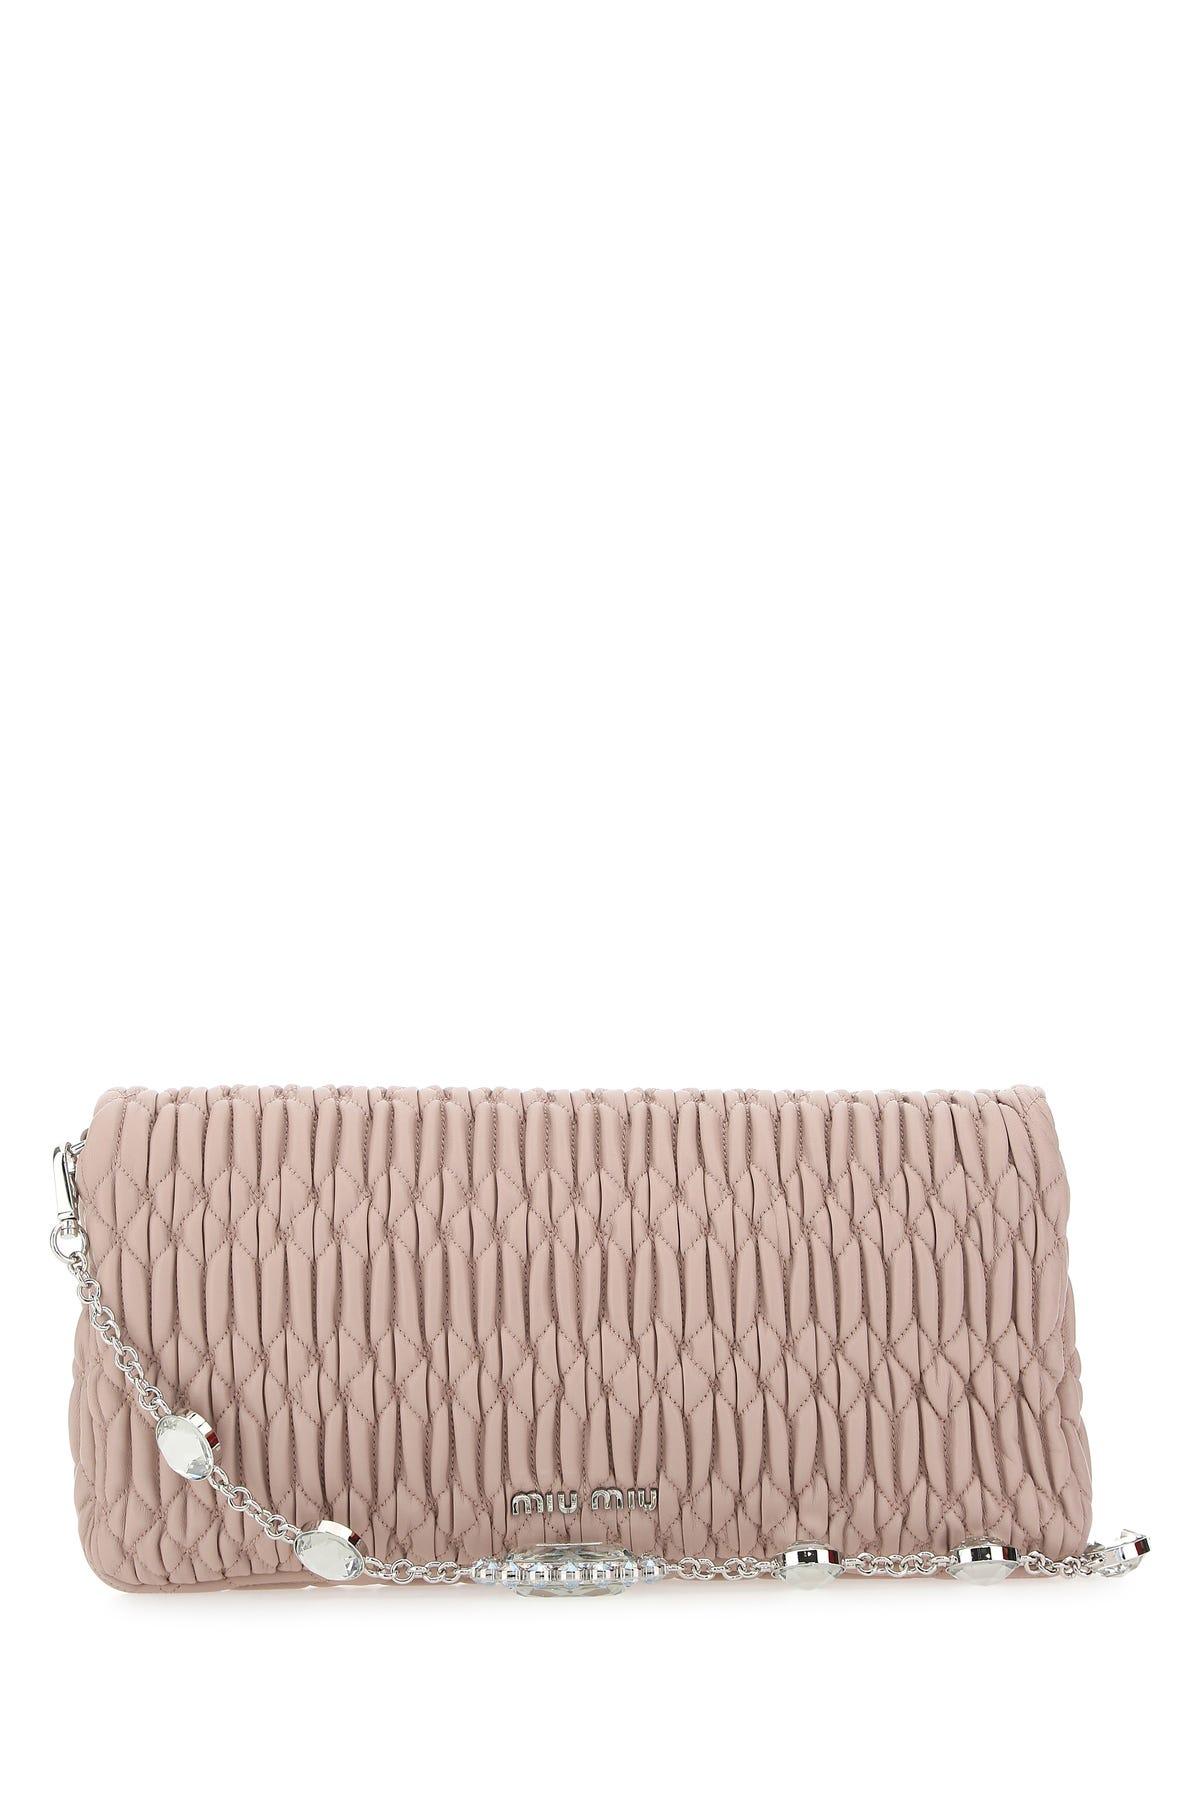 Miu Miu Pastel Nappa Leather Miu Crystal Shoulder Bag in Pink | Lyst